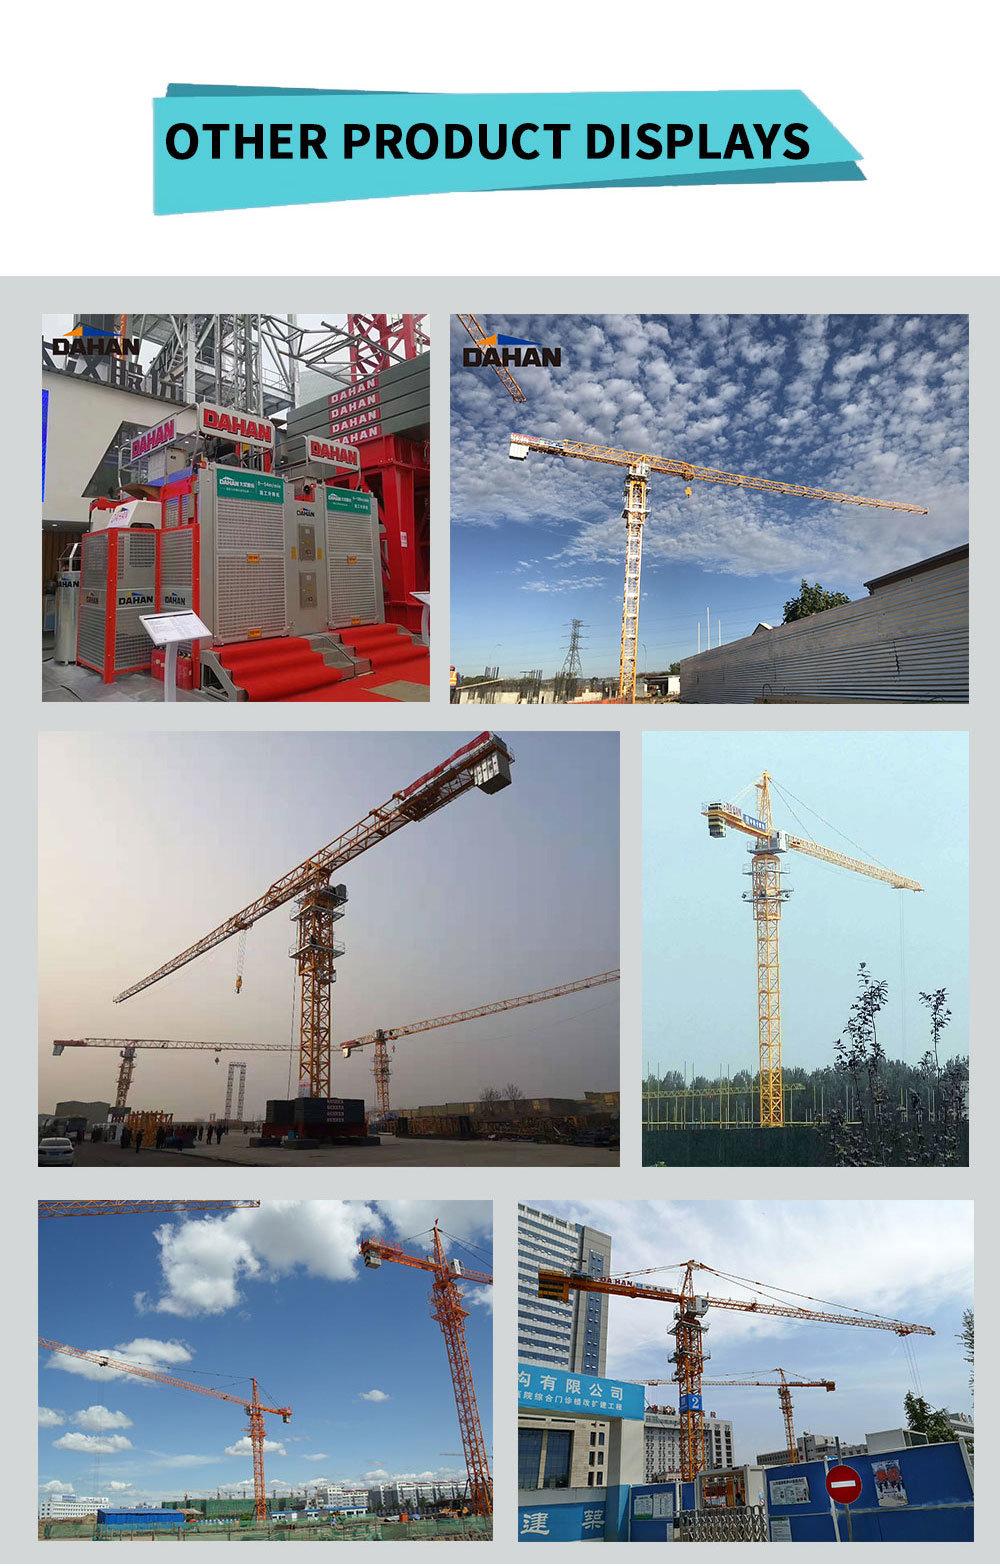 Construction Crane 10t Construction Tower Crane Construction Machinery